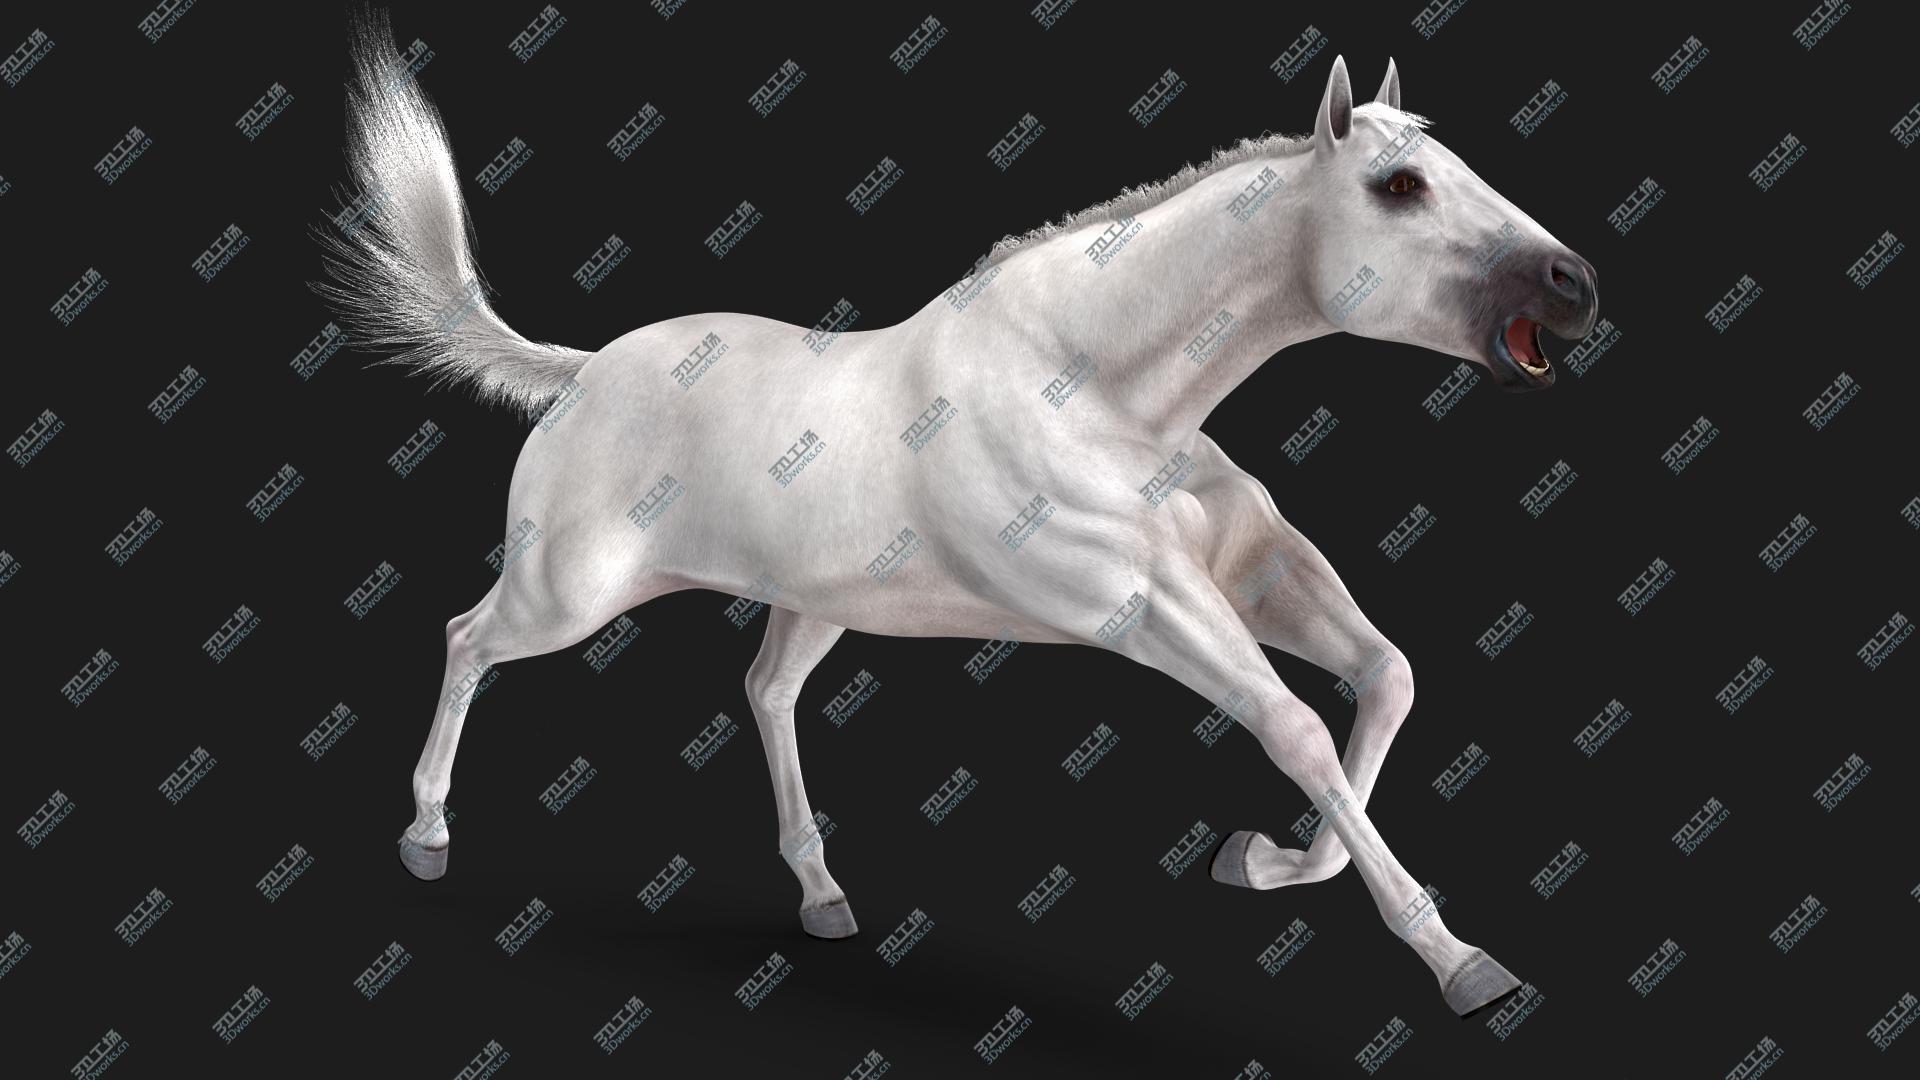 images/goods_img/20210319/3D White Horse Fur Rigged/2.jpg